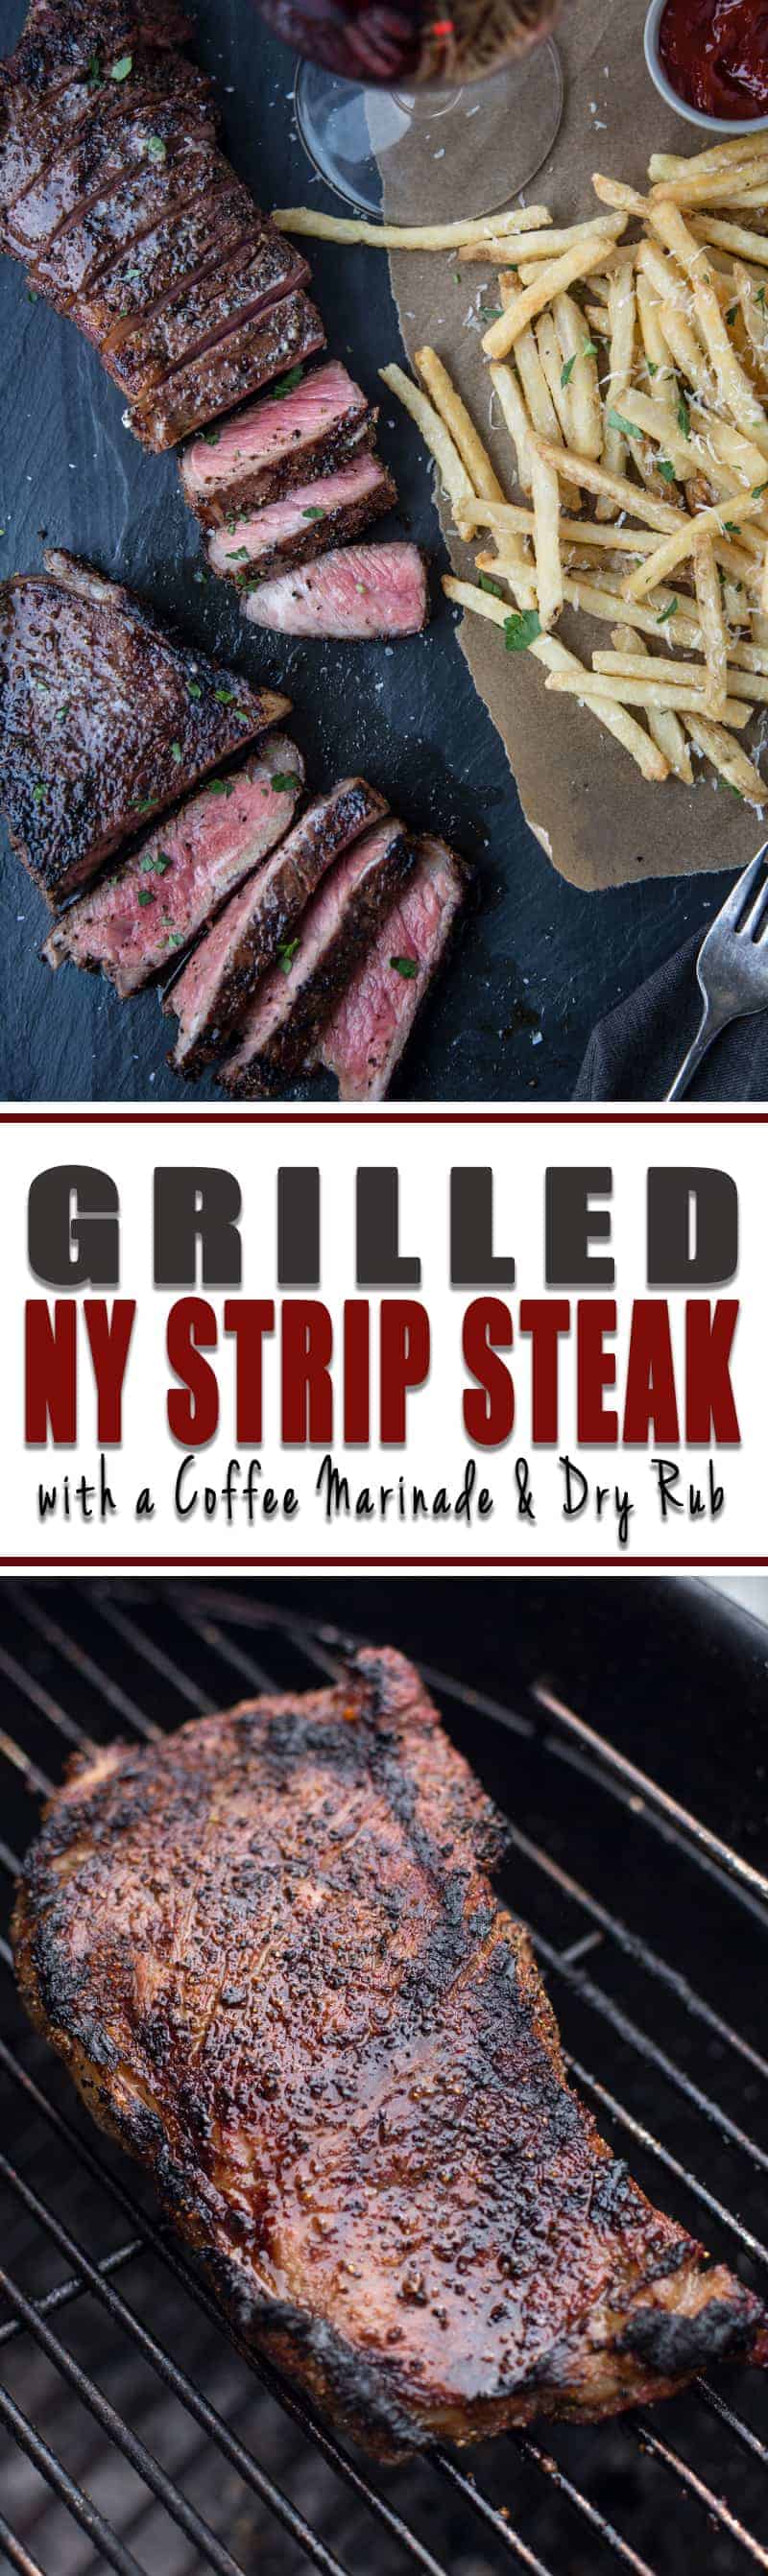 Grilled New York Strip Steak with Coffee Marinade and Rub - Vindulge